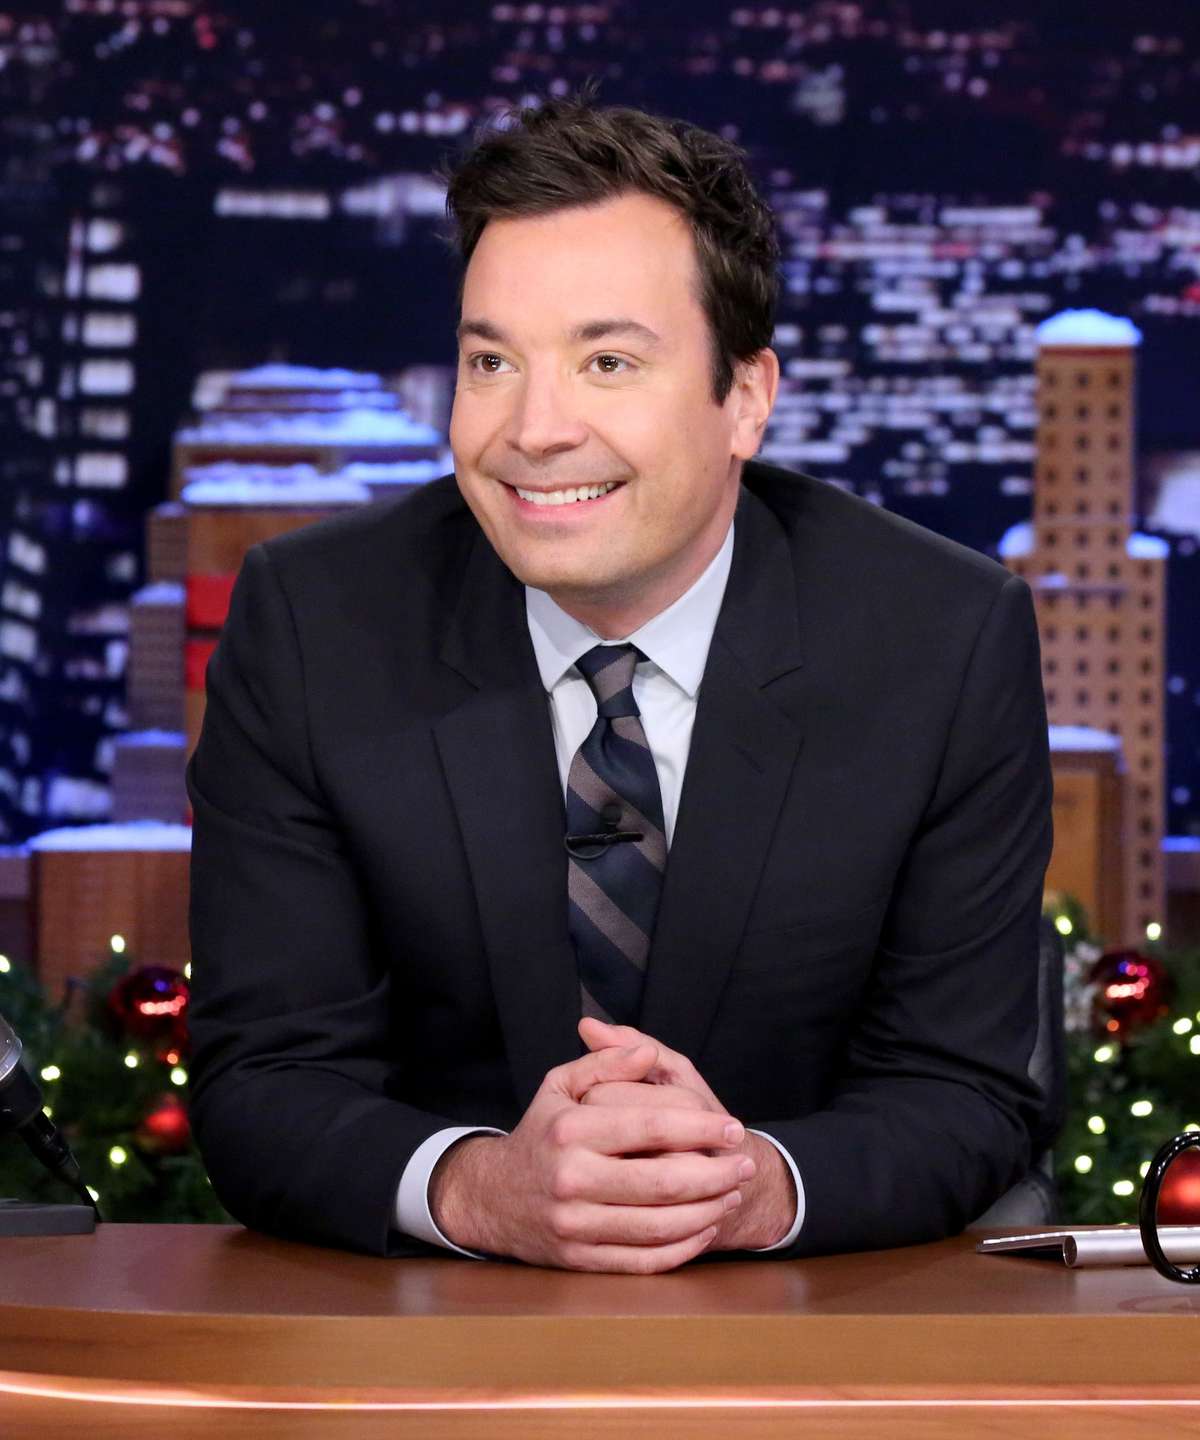 Host Jimmy Fallon on December 15, 2015